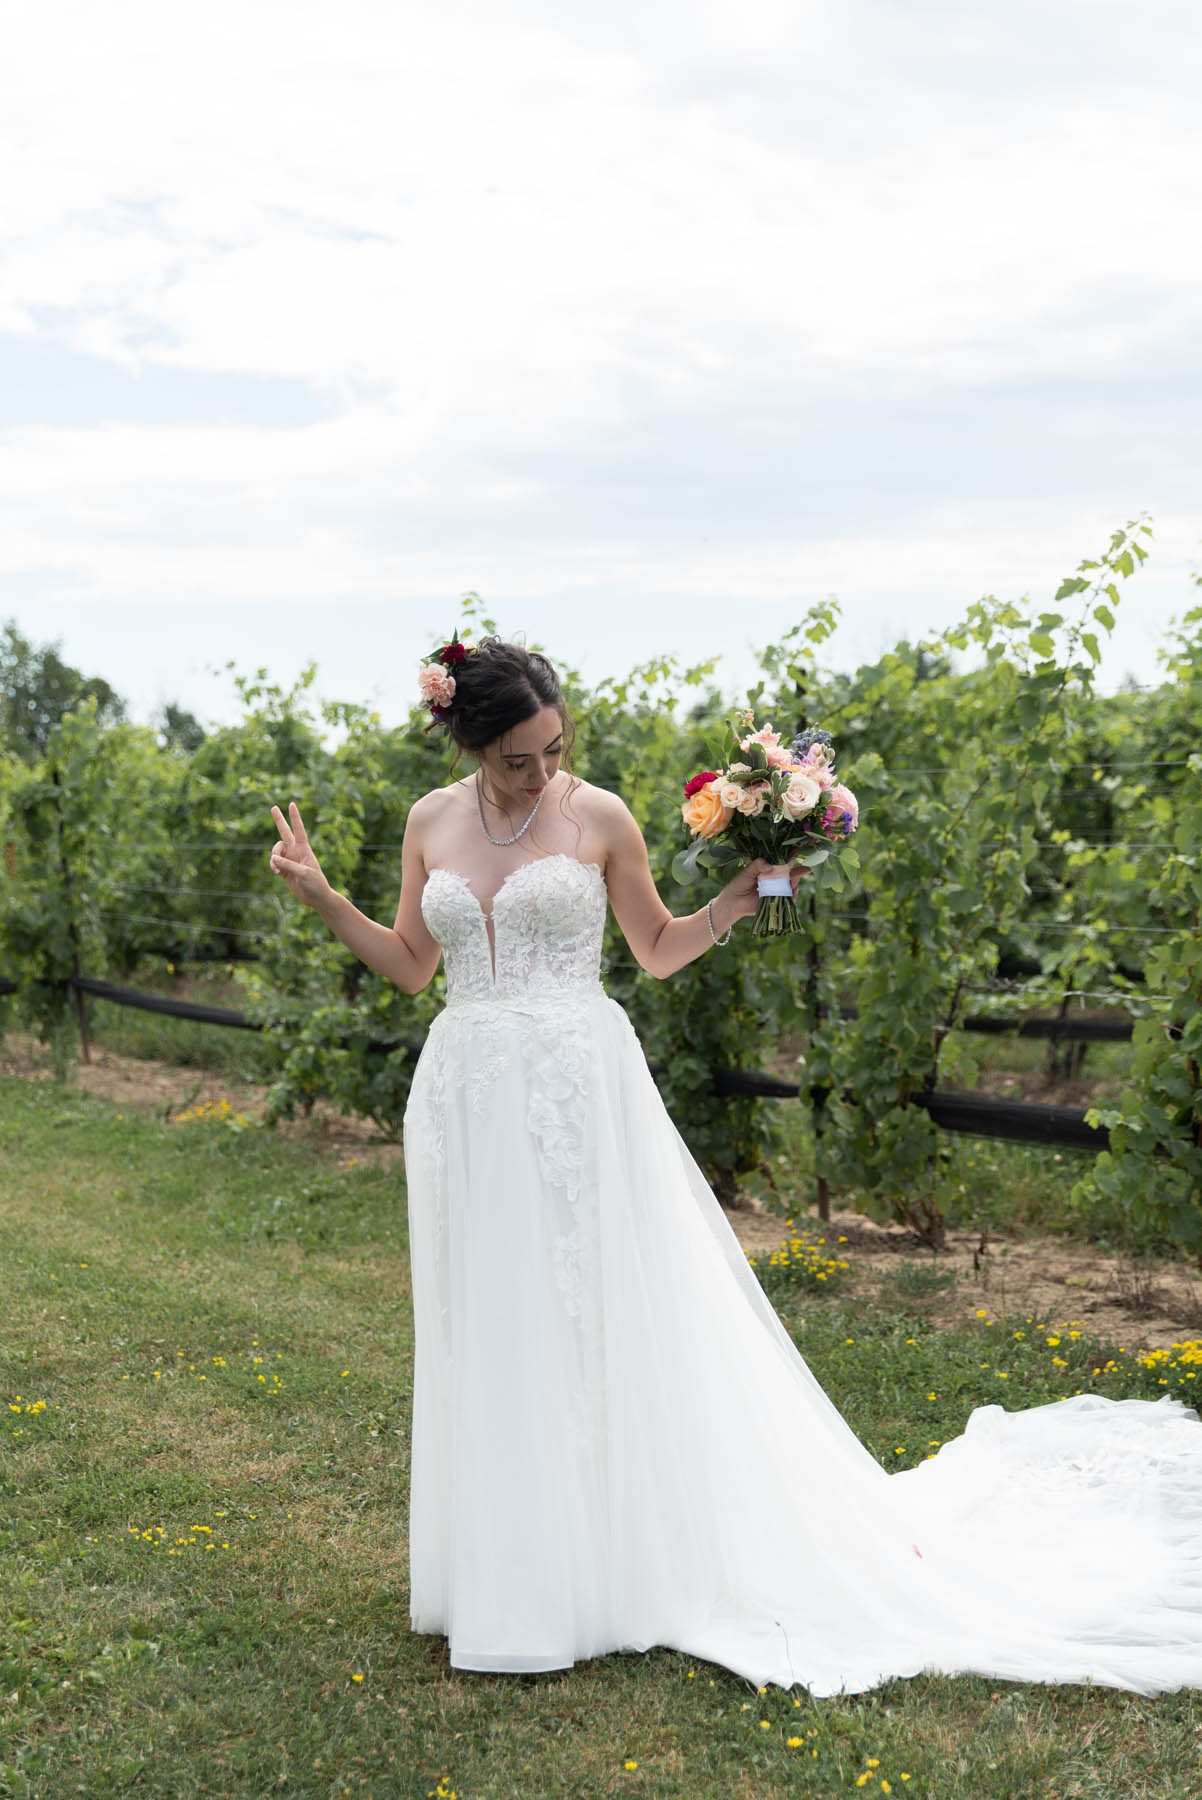 Timeless Wedding Moments Through the Lens of a Photographer - Stefania + Tristan